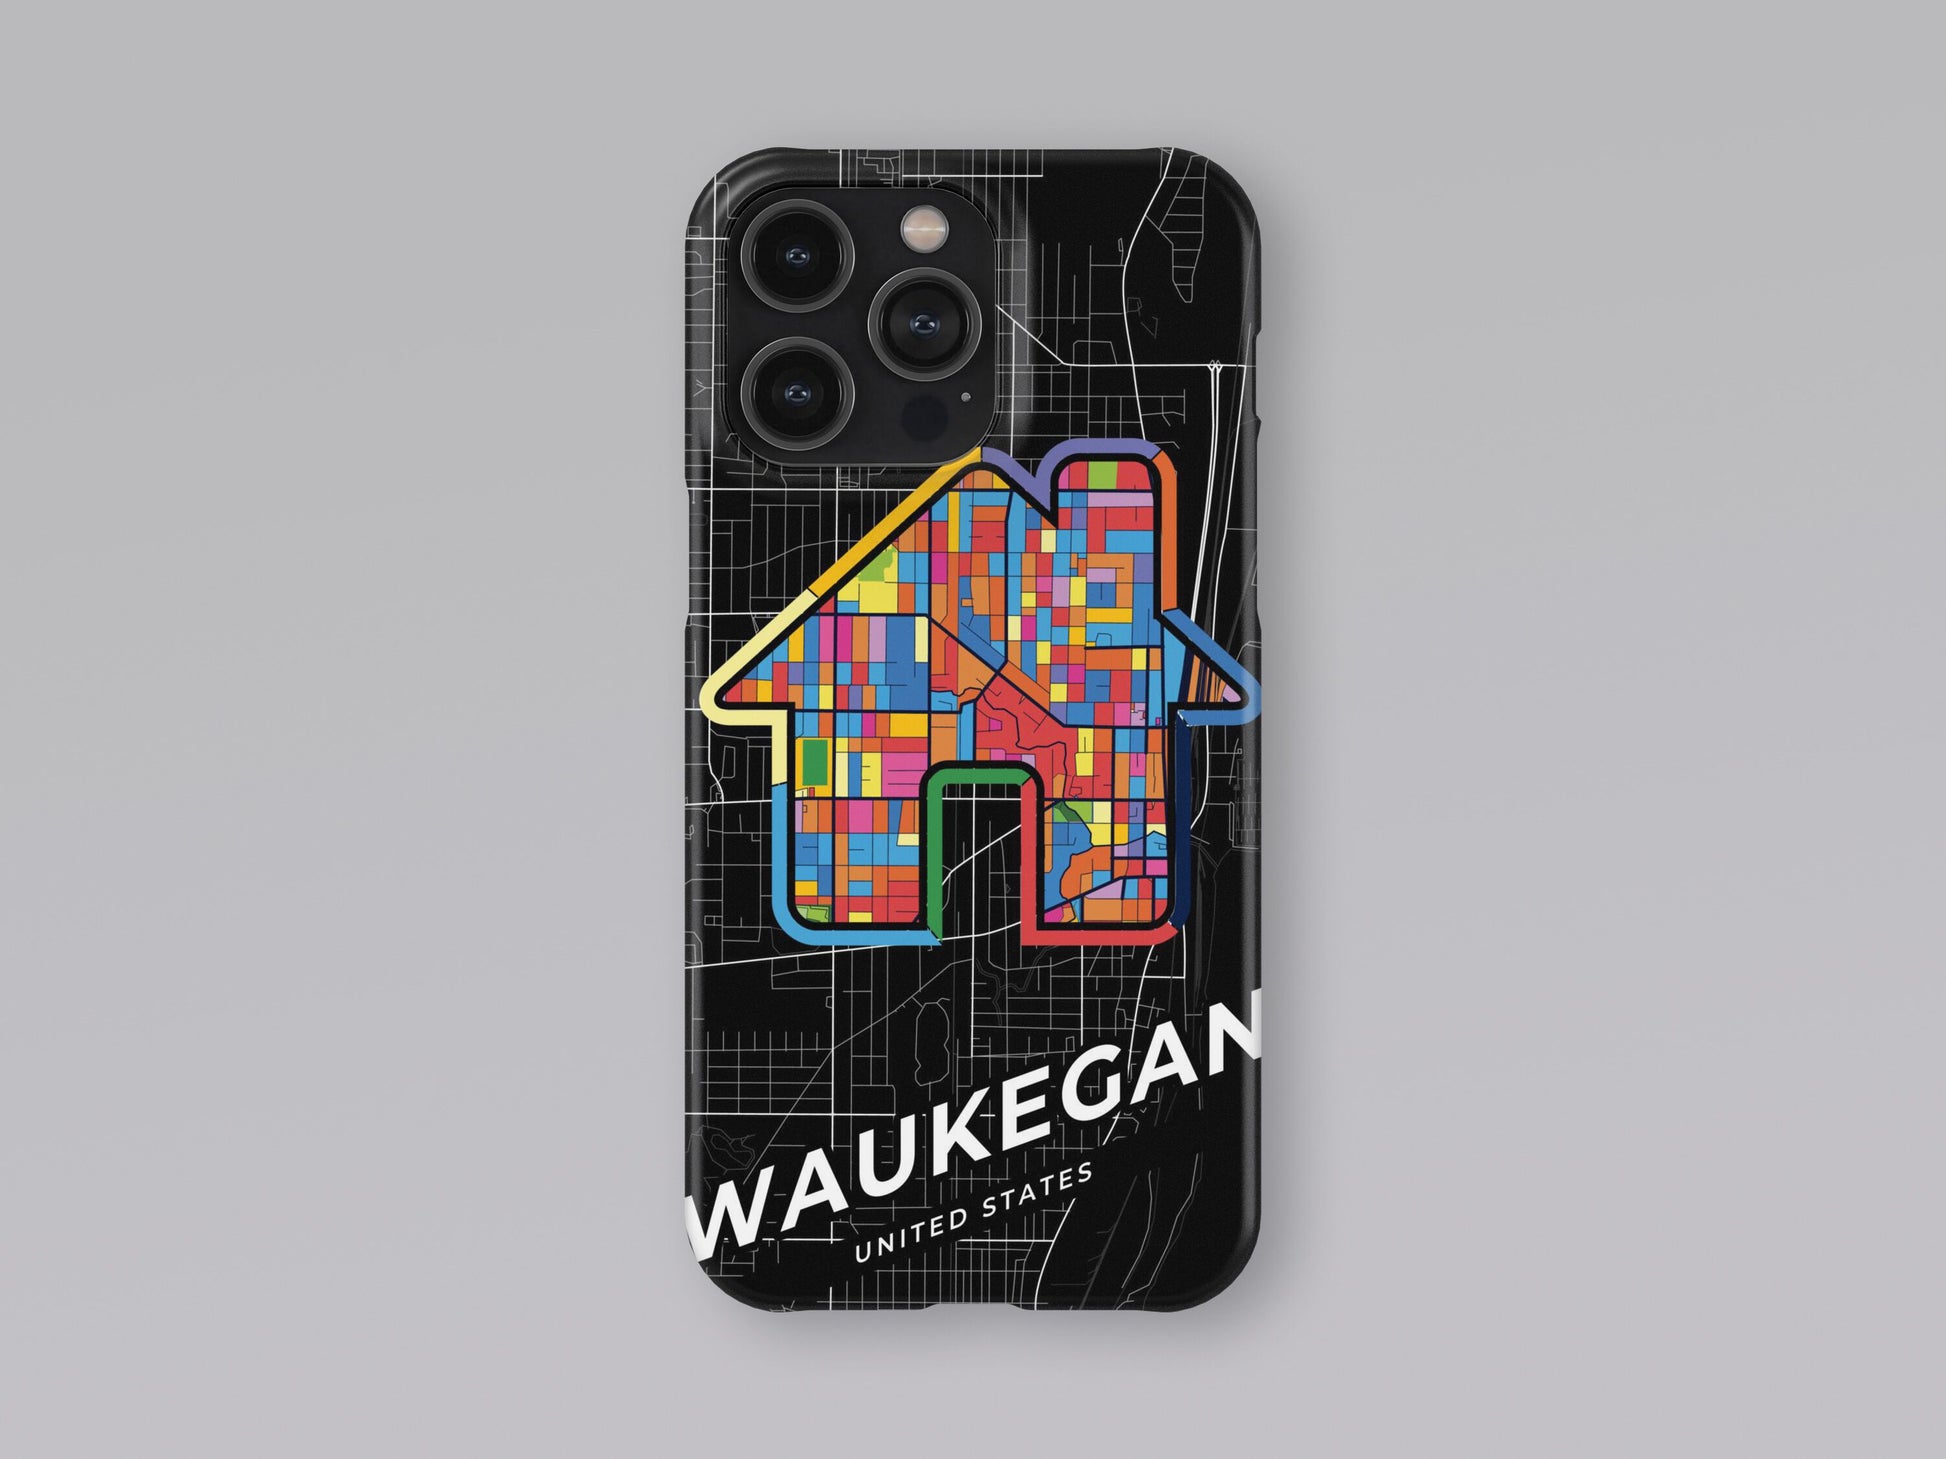 Waukegan Illinois slim phone case with colorful icon 3